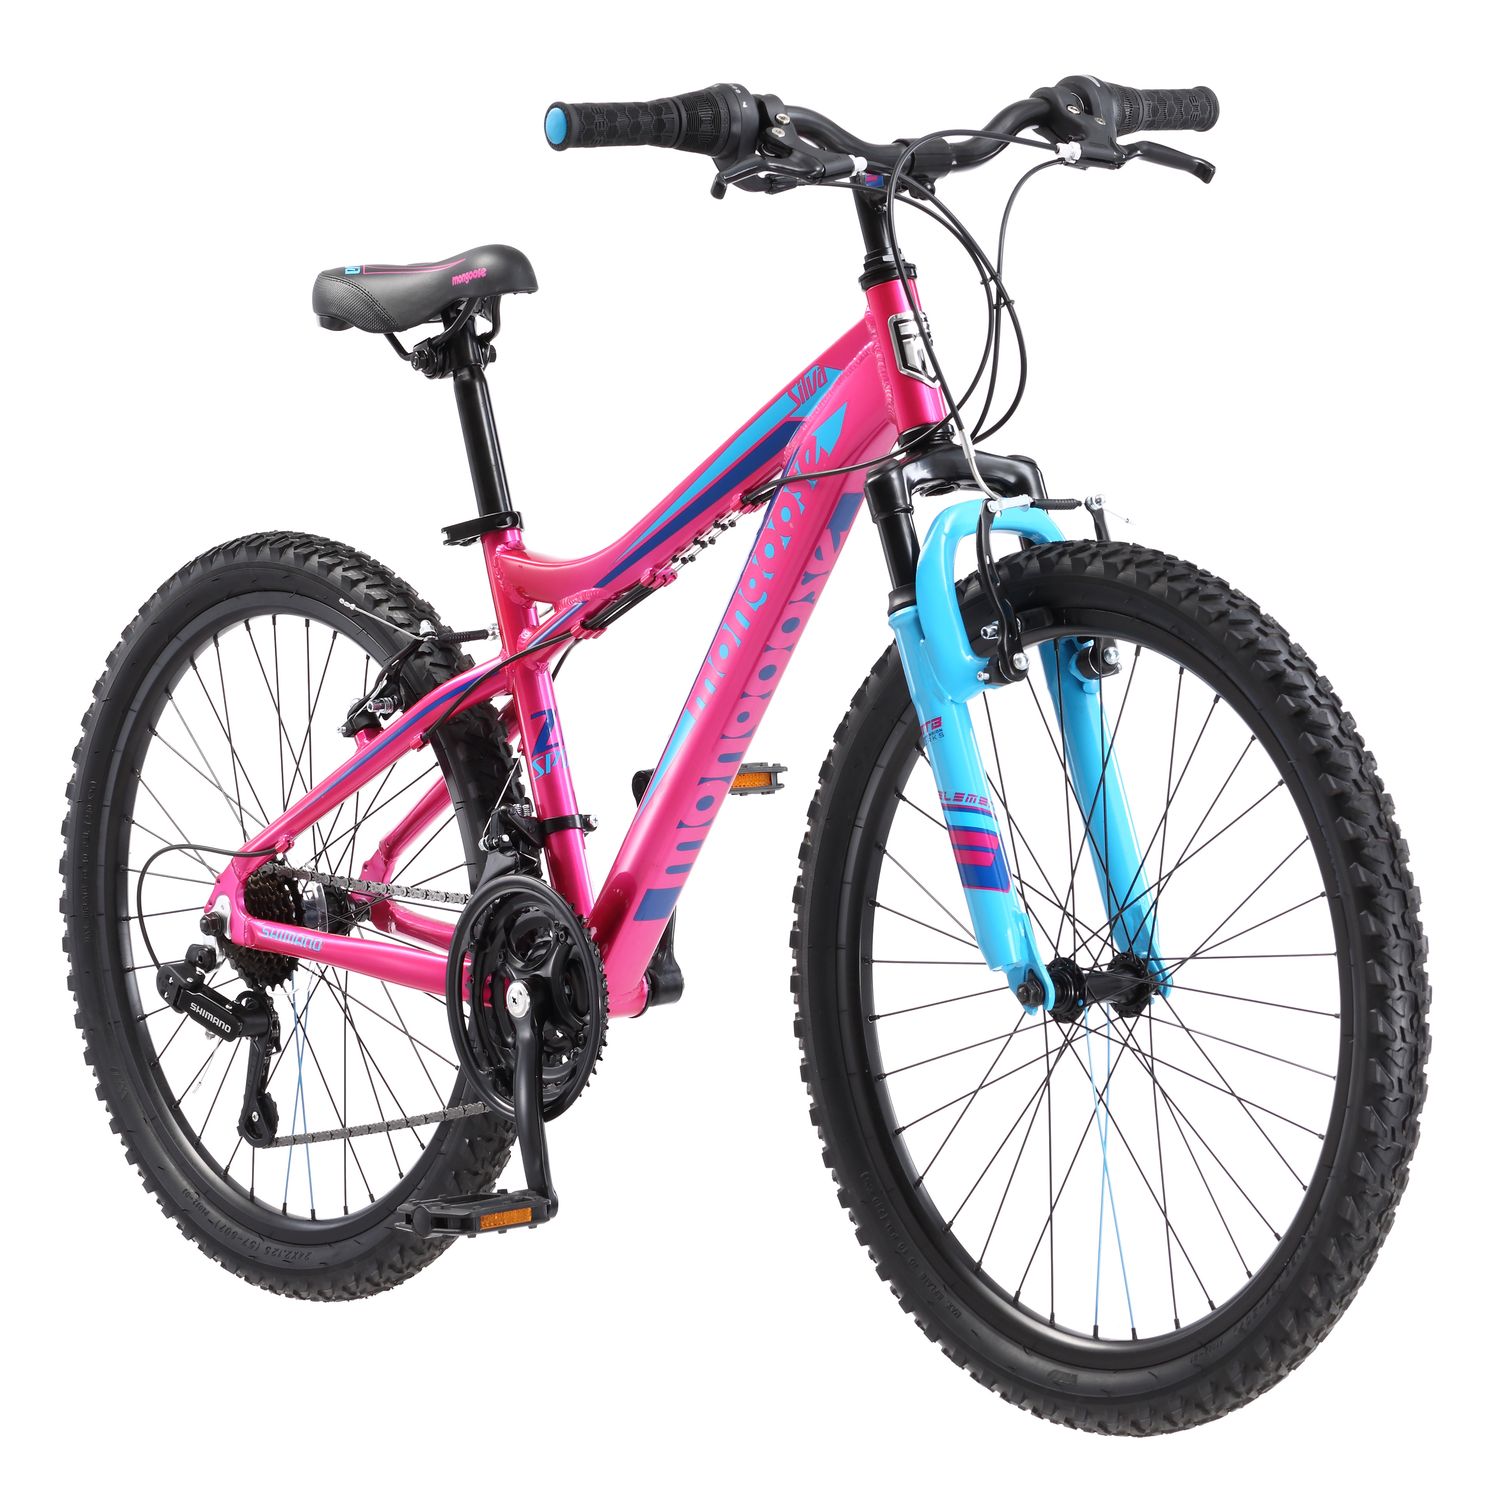 24 inch bike for girl